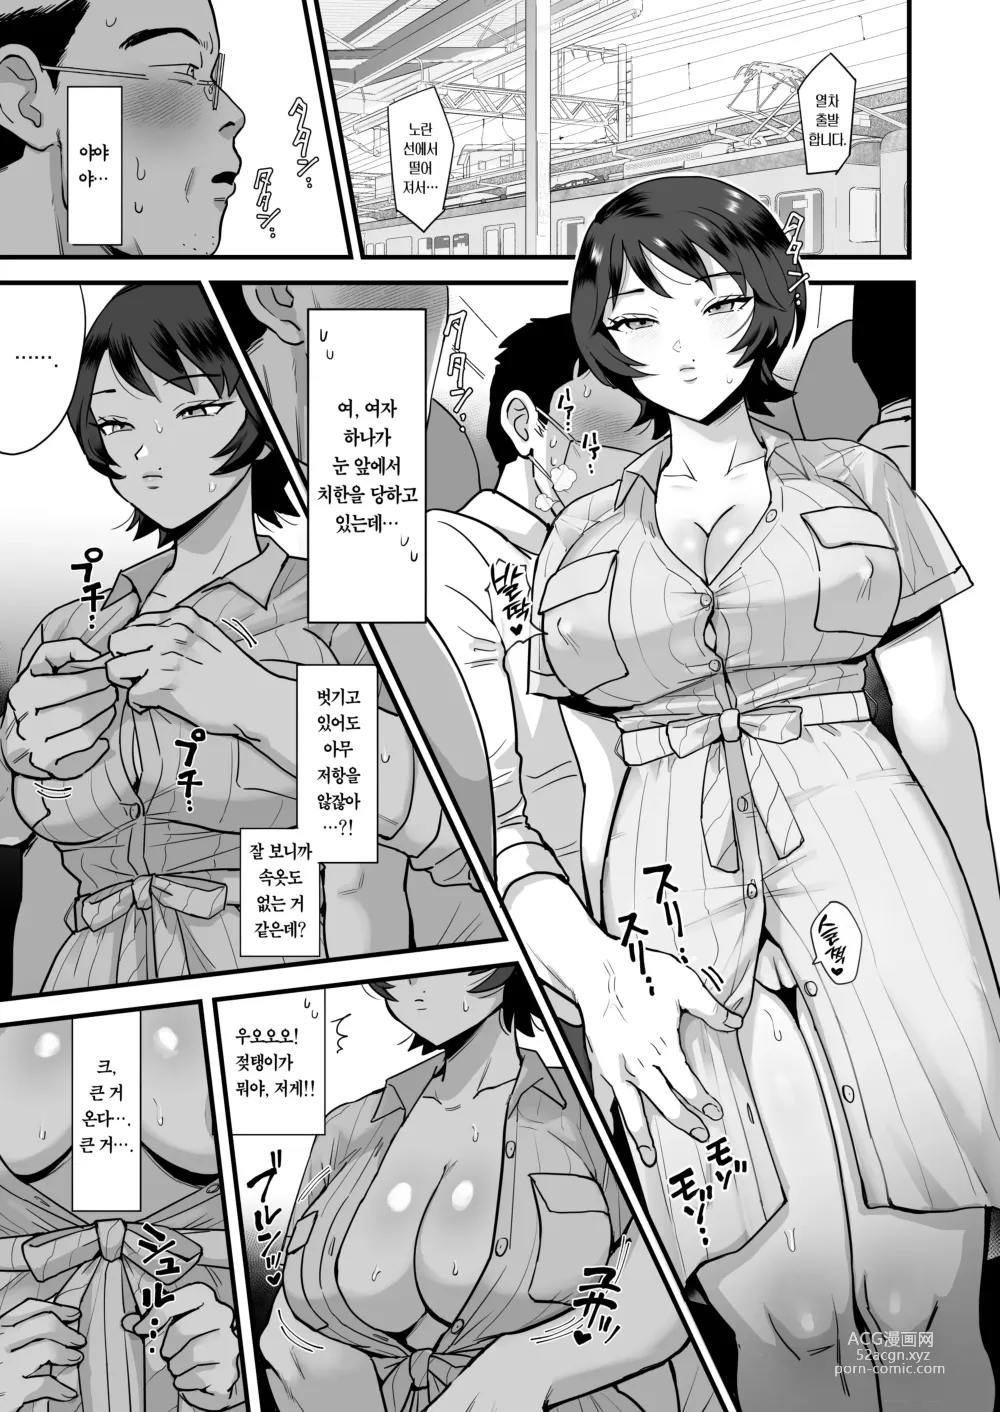 Page 10 of doujinshi 옛 동창의 섹프 격한 걸 좋아하는 료코 씨.